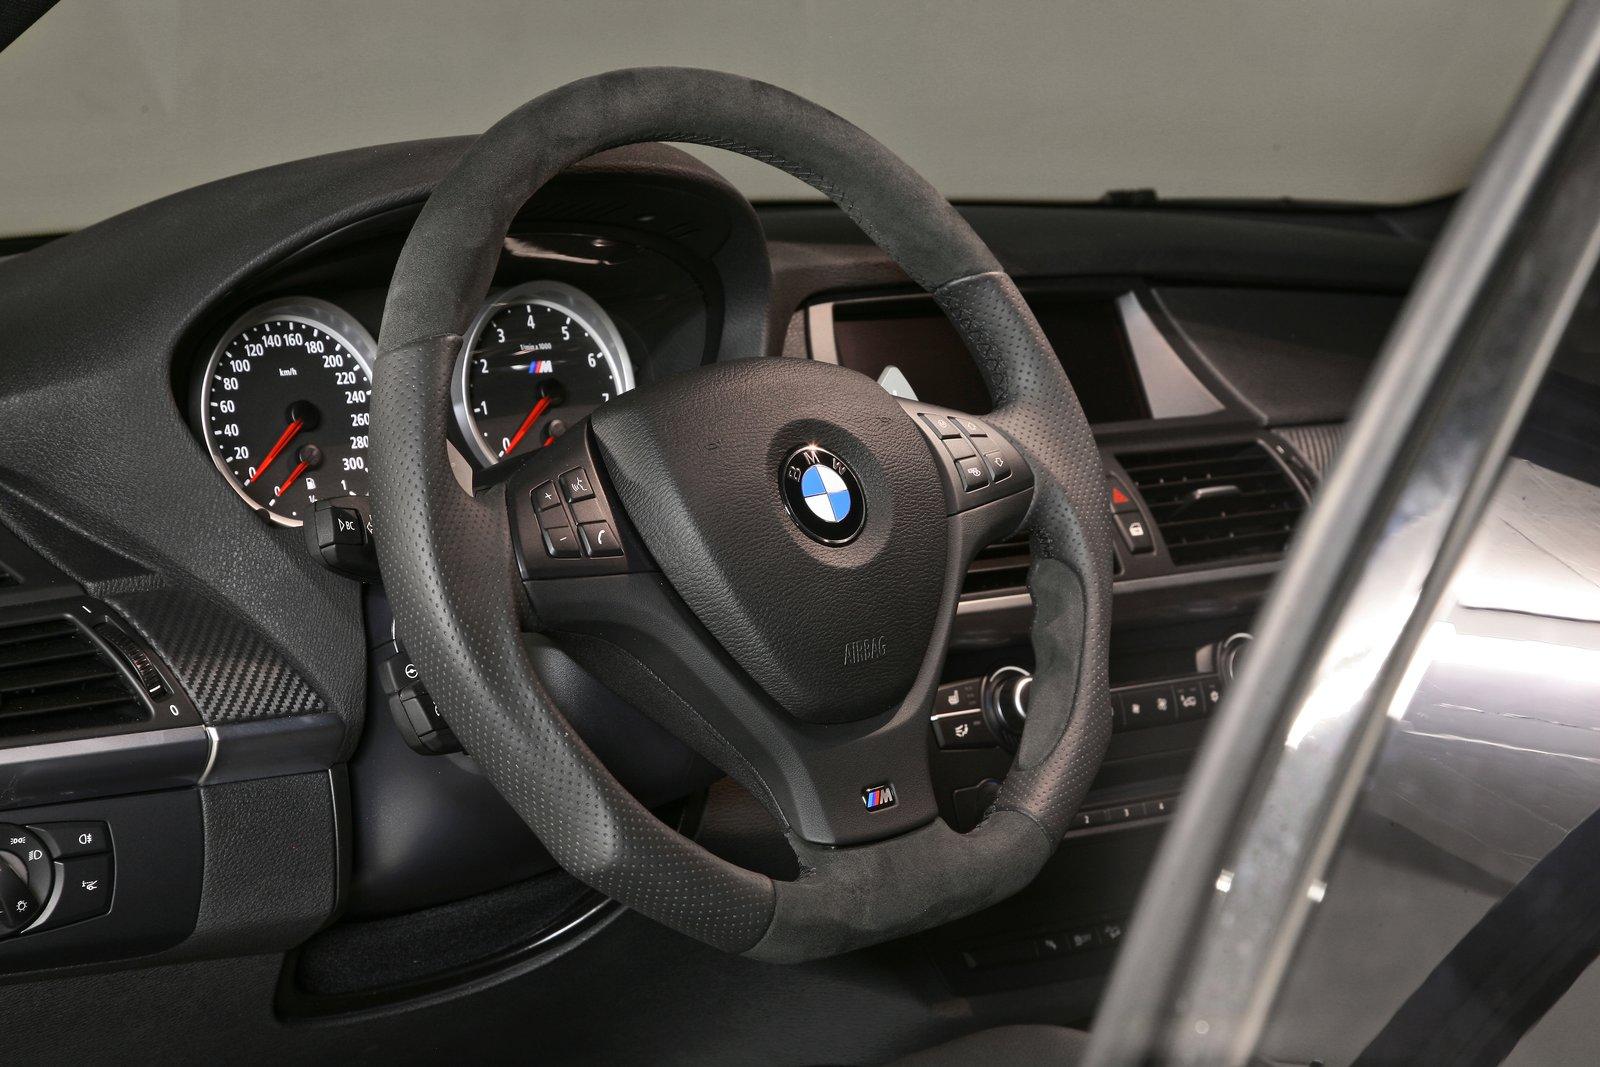 BMW X6 Interior